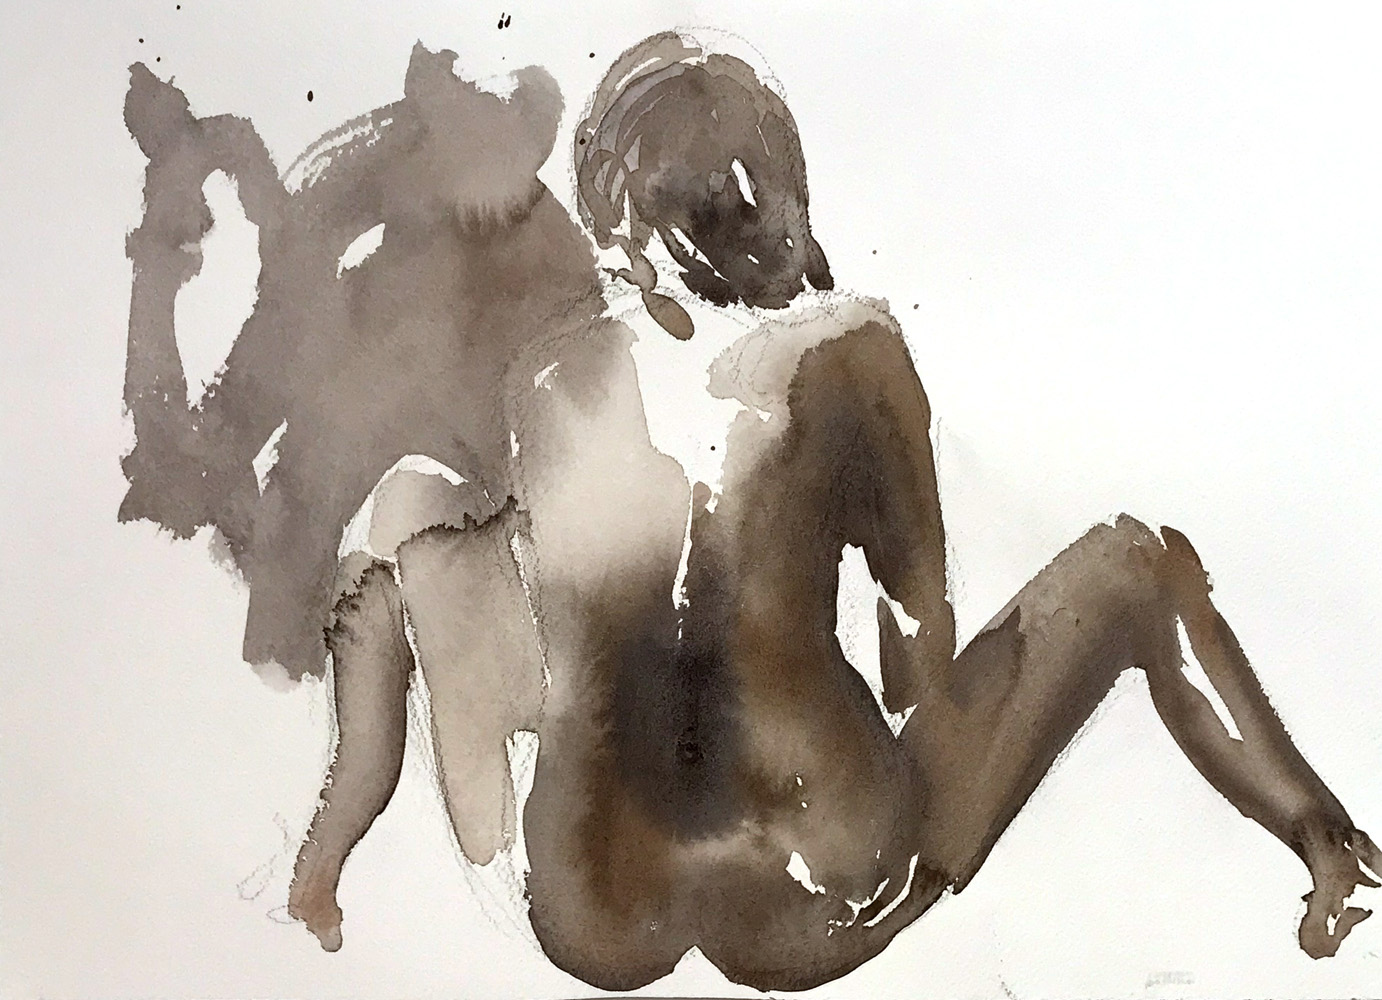 Indira-Cesarine-Anna-2018-Watercolor-on-paper-001.jpg